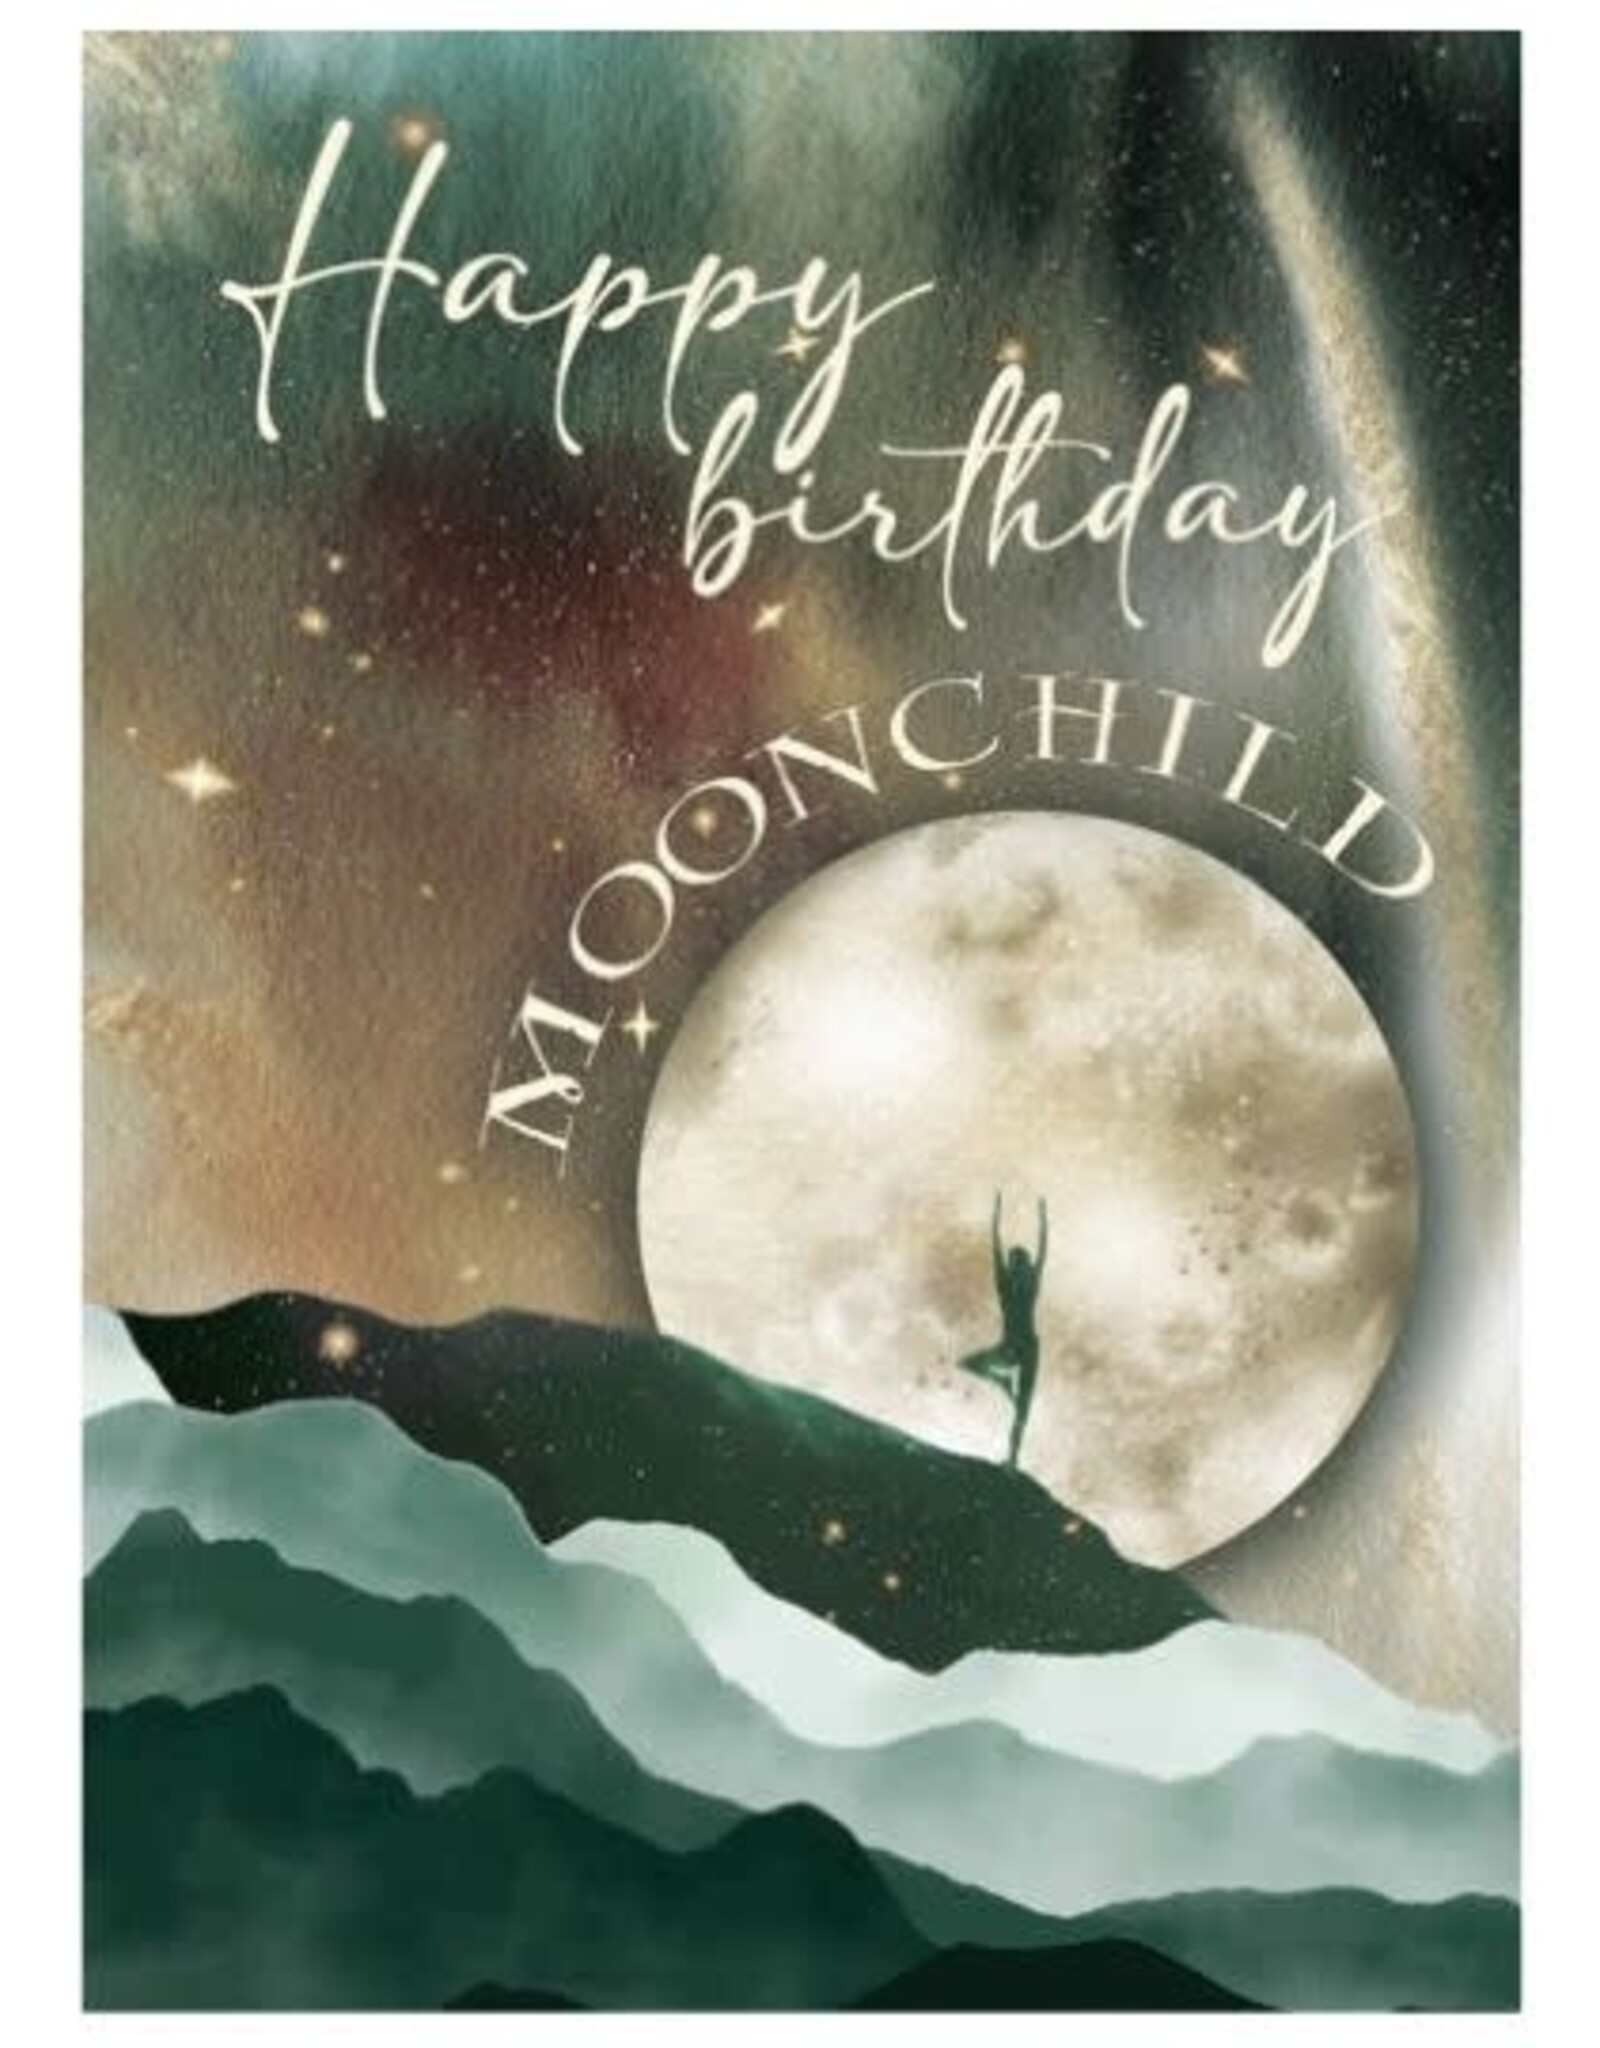 Tree - Free Greetings Happy Birthday Moon Child Greeting Card